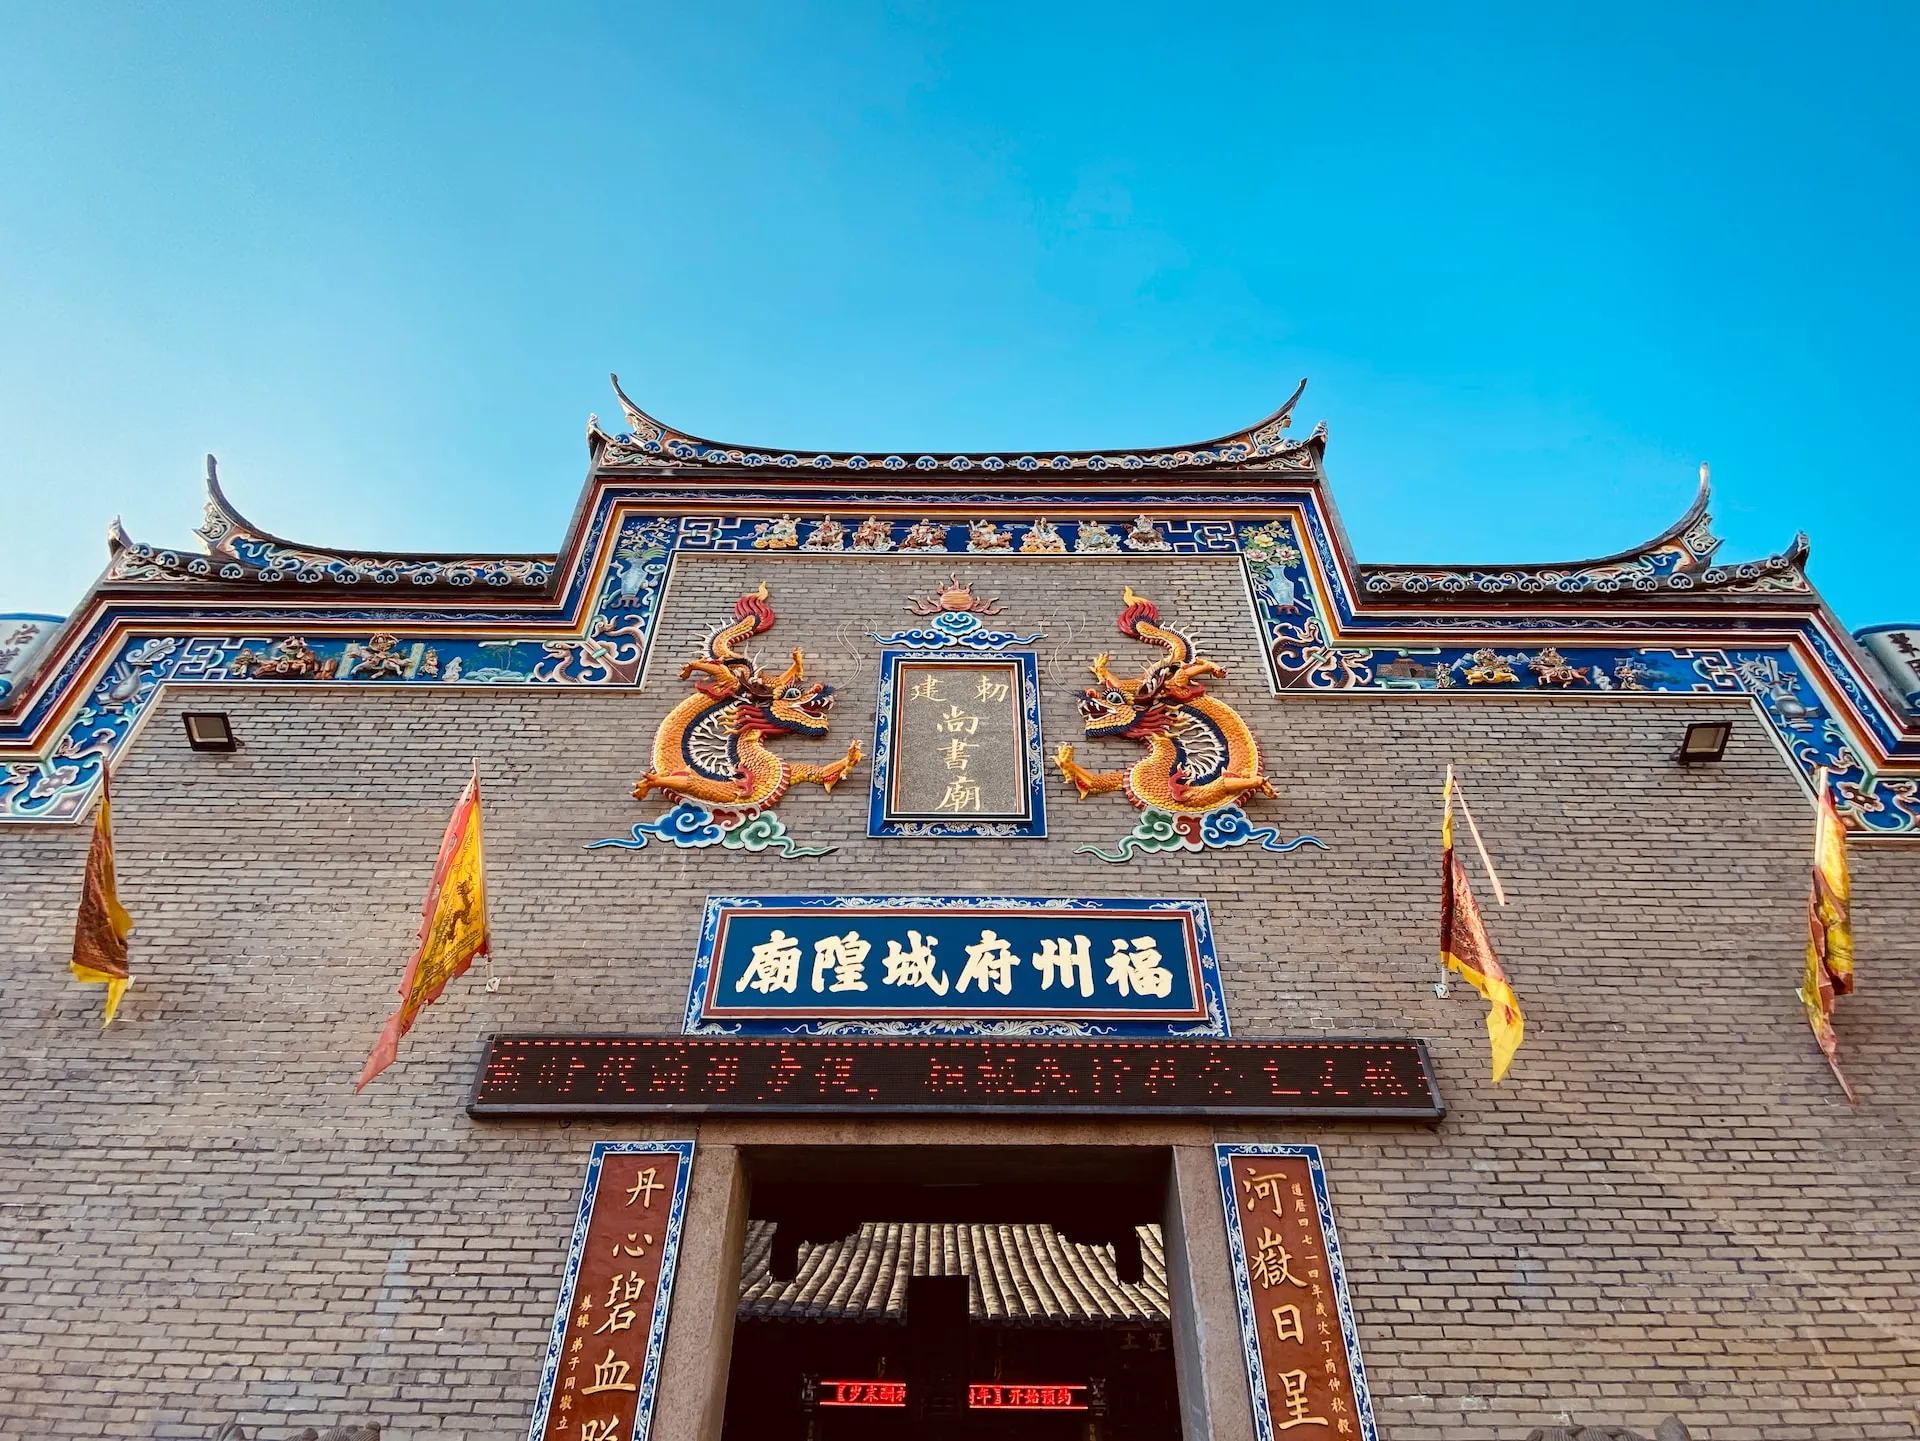 Local temple in Fuzhou. Source: Photo by Jiachen Lin on Unsplash